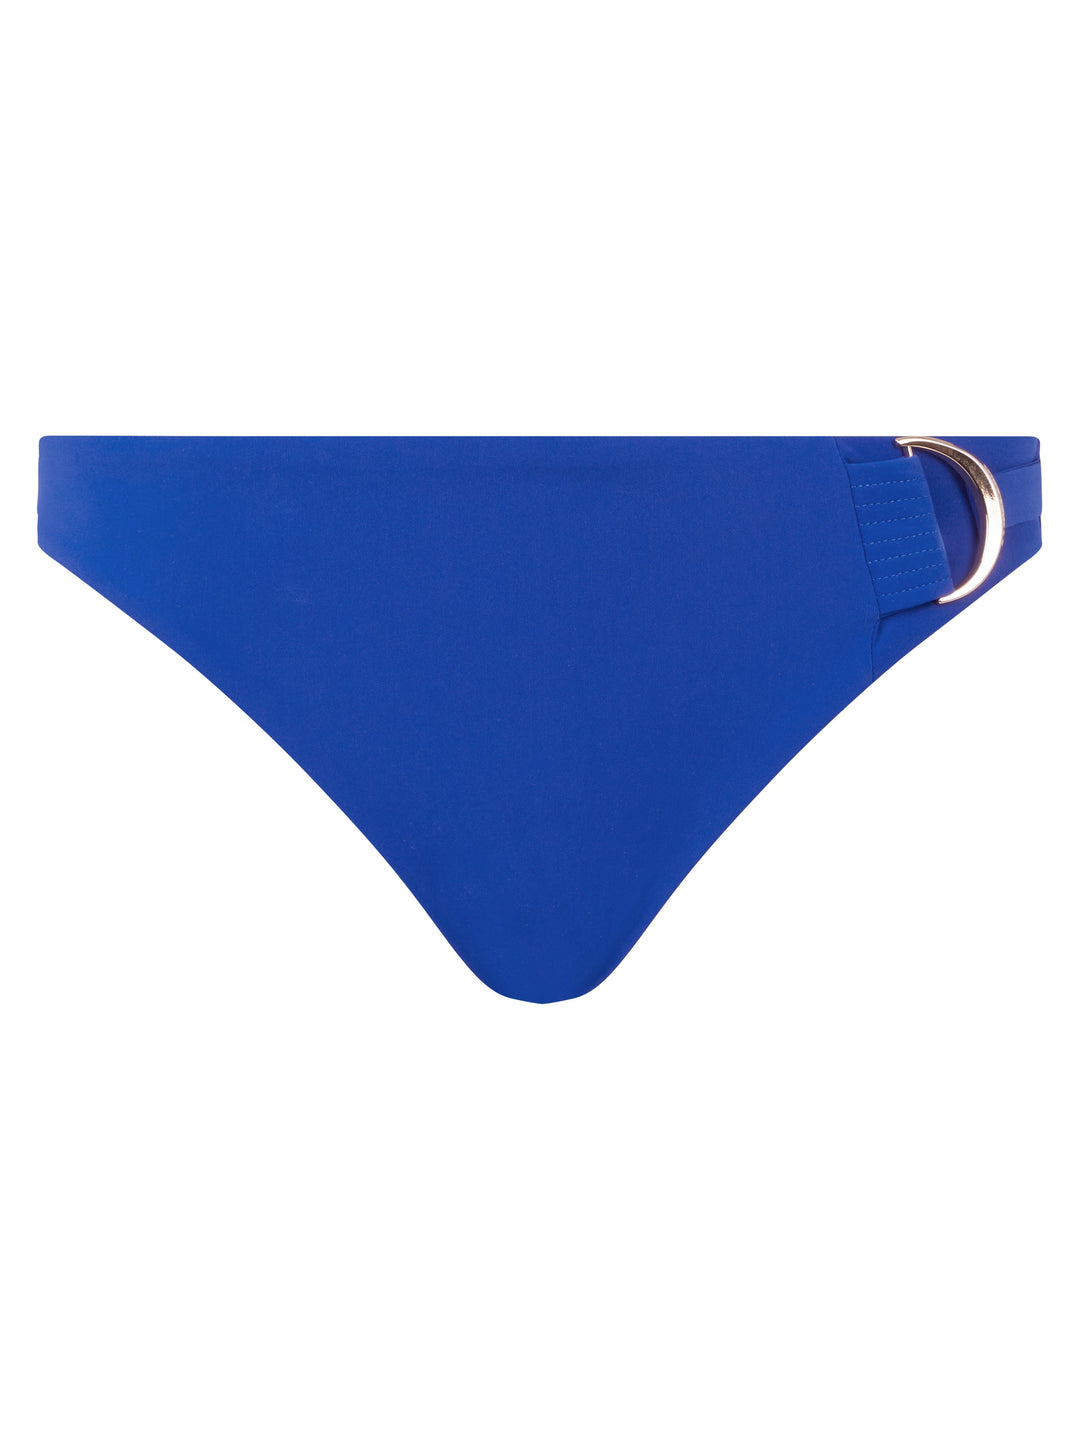 Costumi da bagno Chantelle - Slip bikini celeste Slip bikini blu intenso Costumi da bagno Chantelle